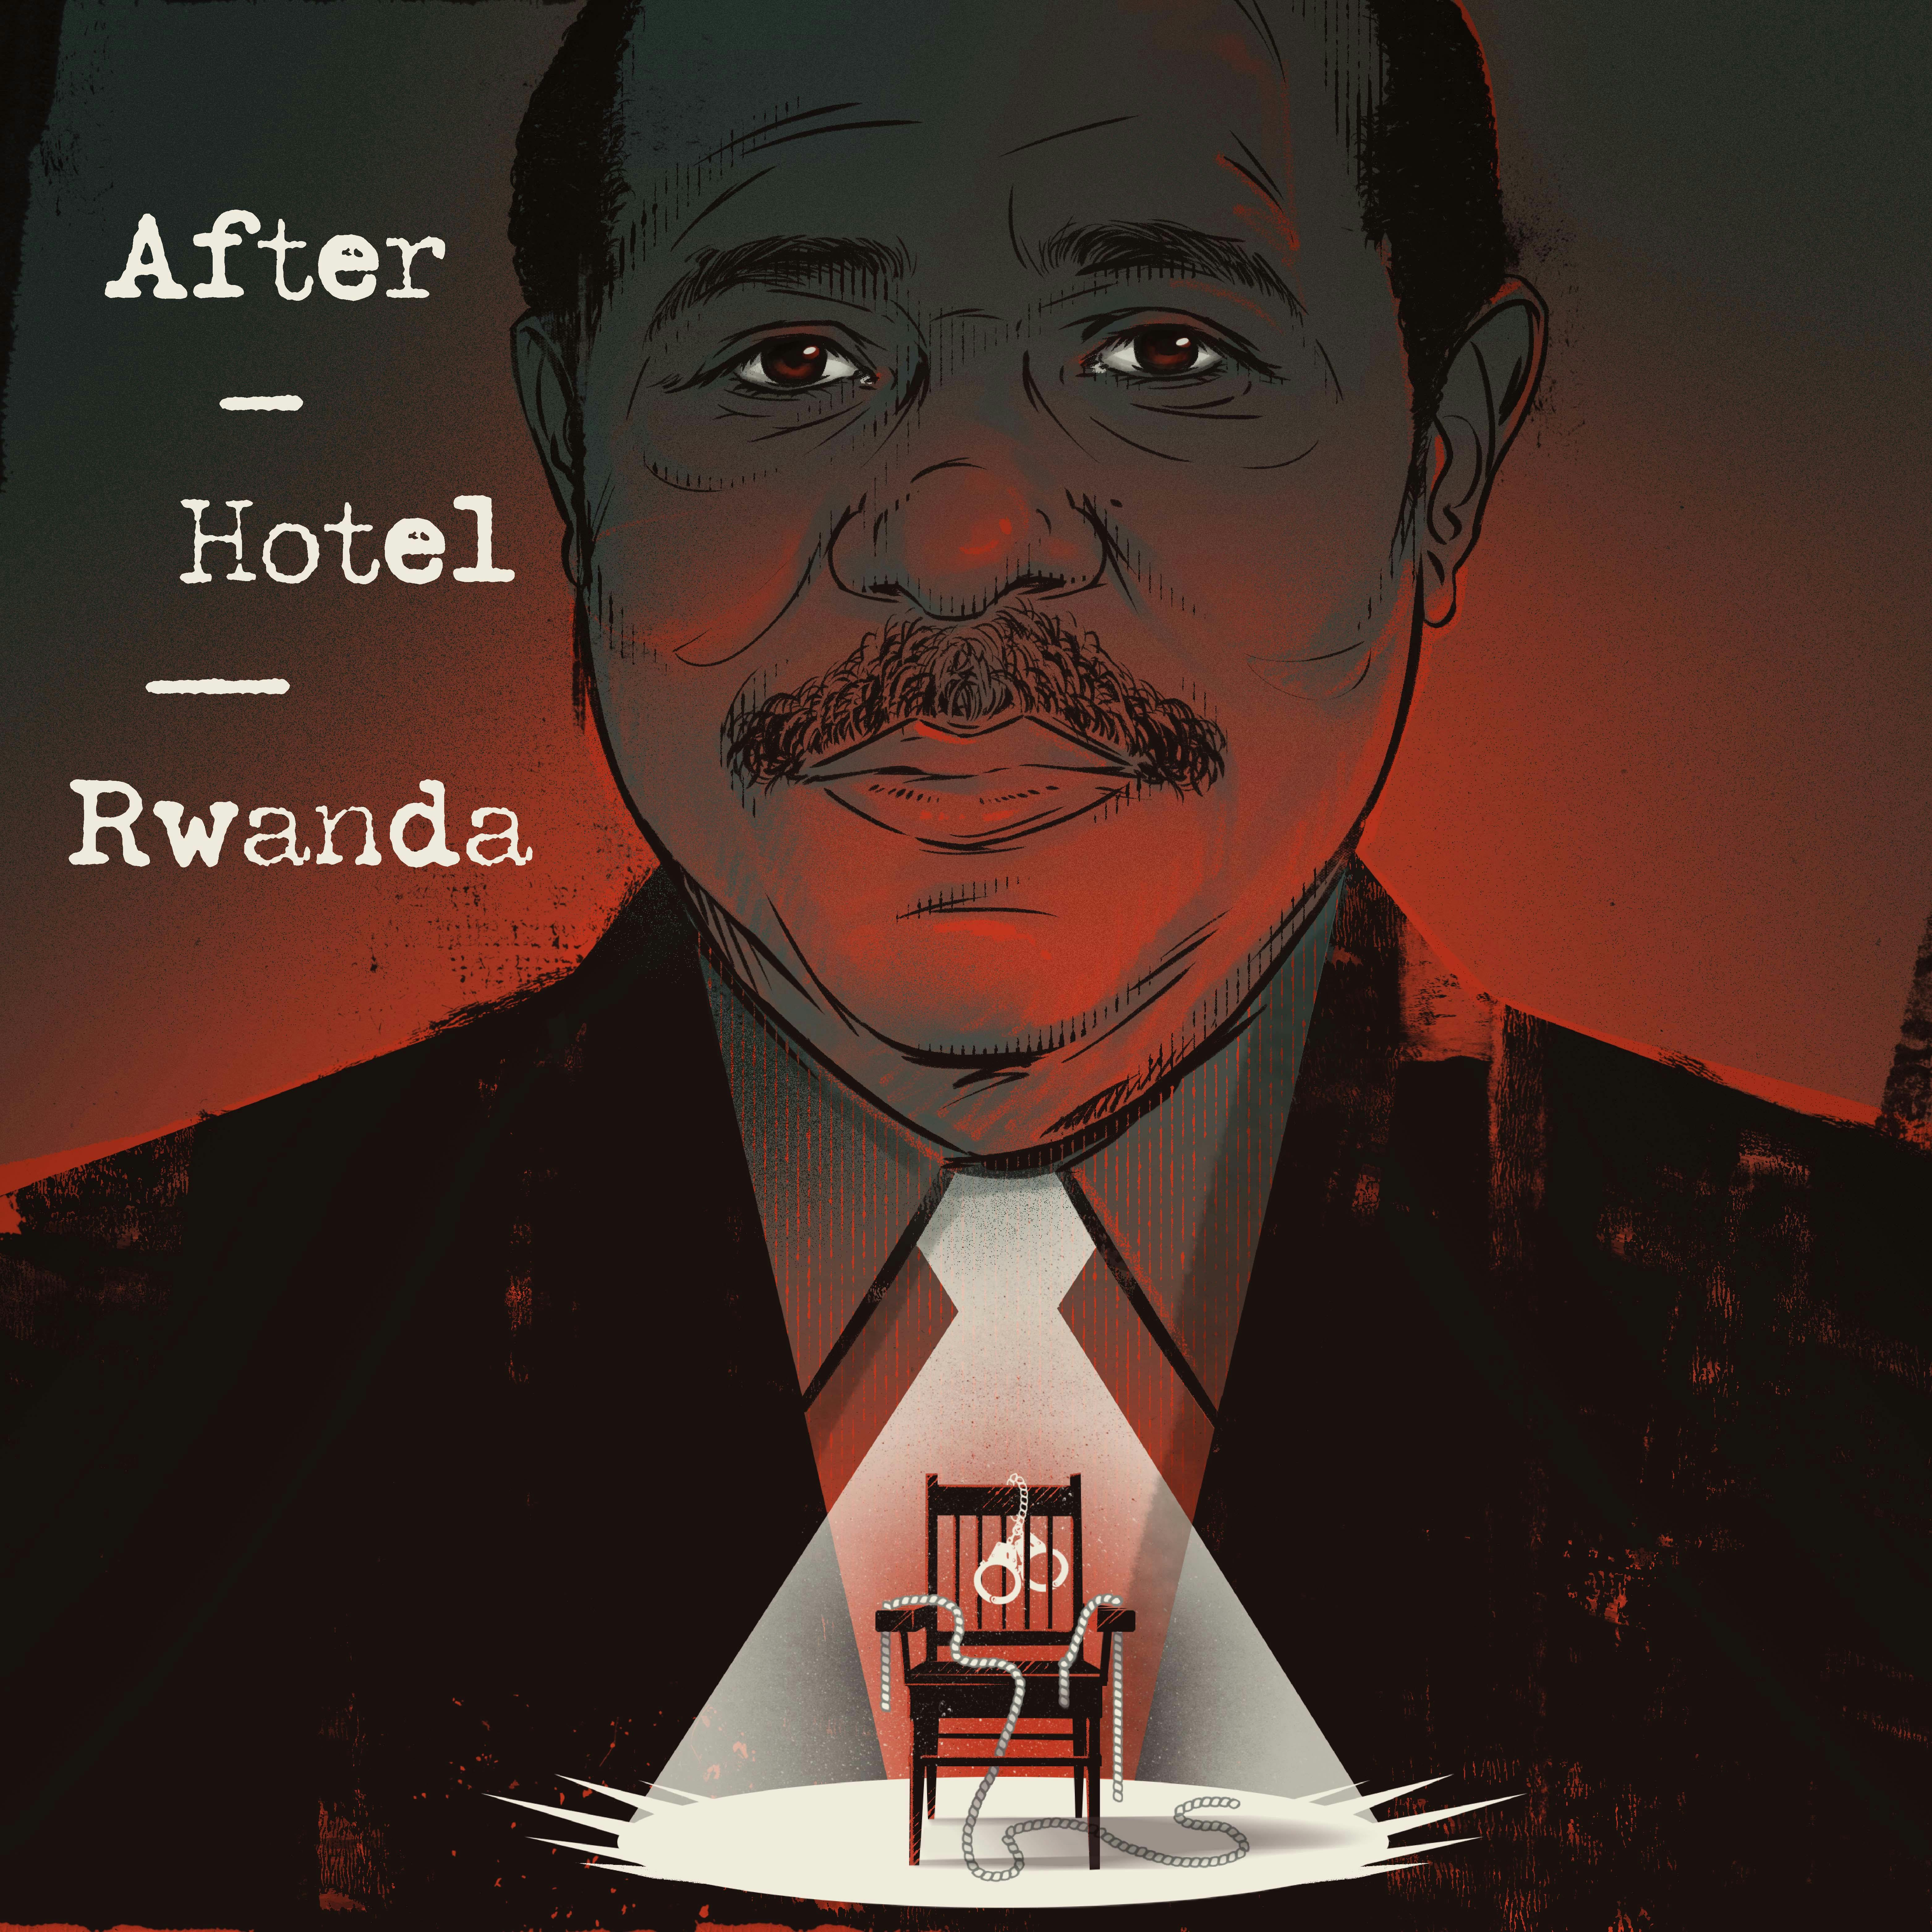 After Hotel Rwanda, Part 1: The Trap